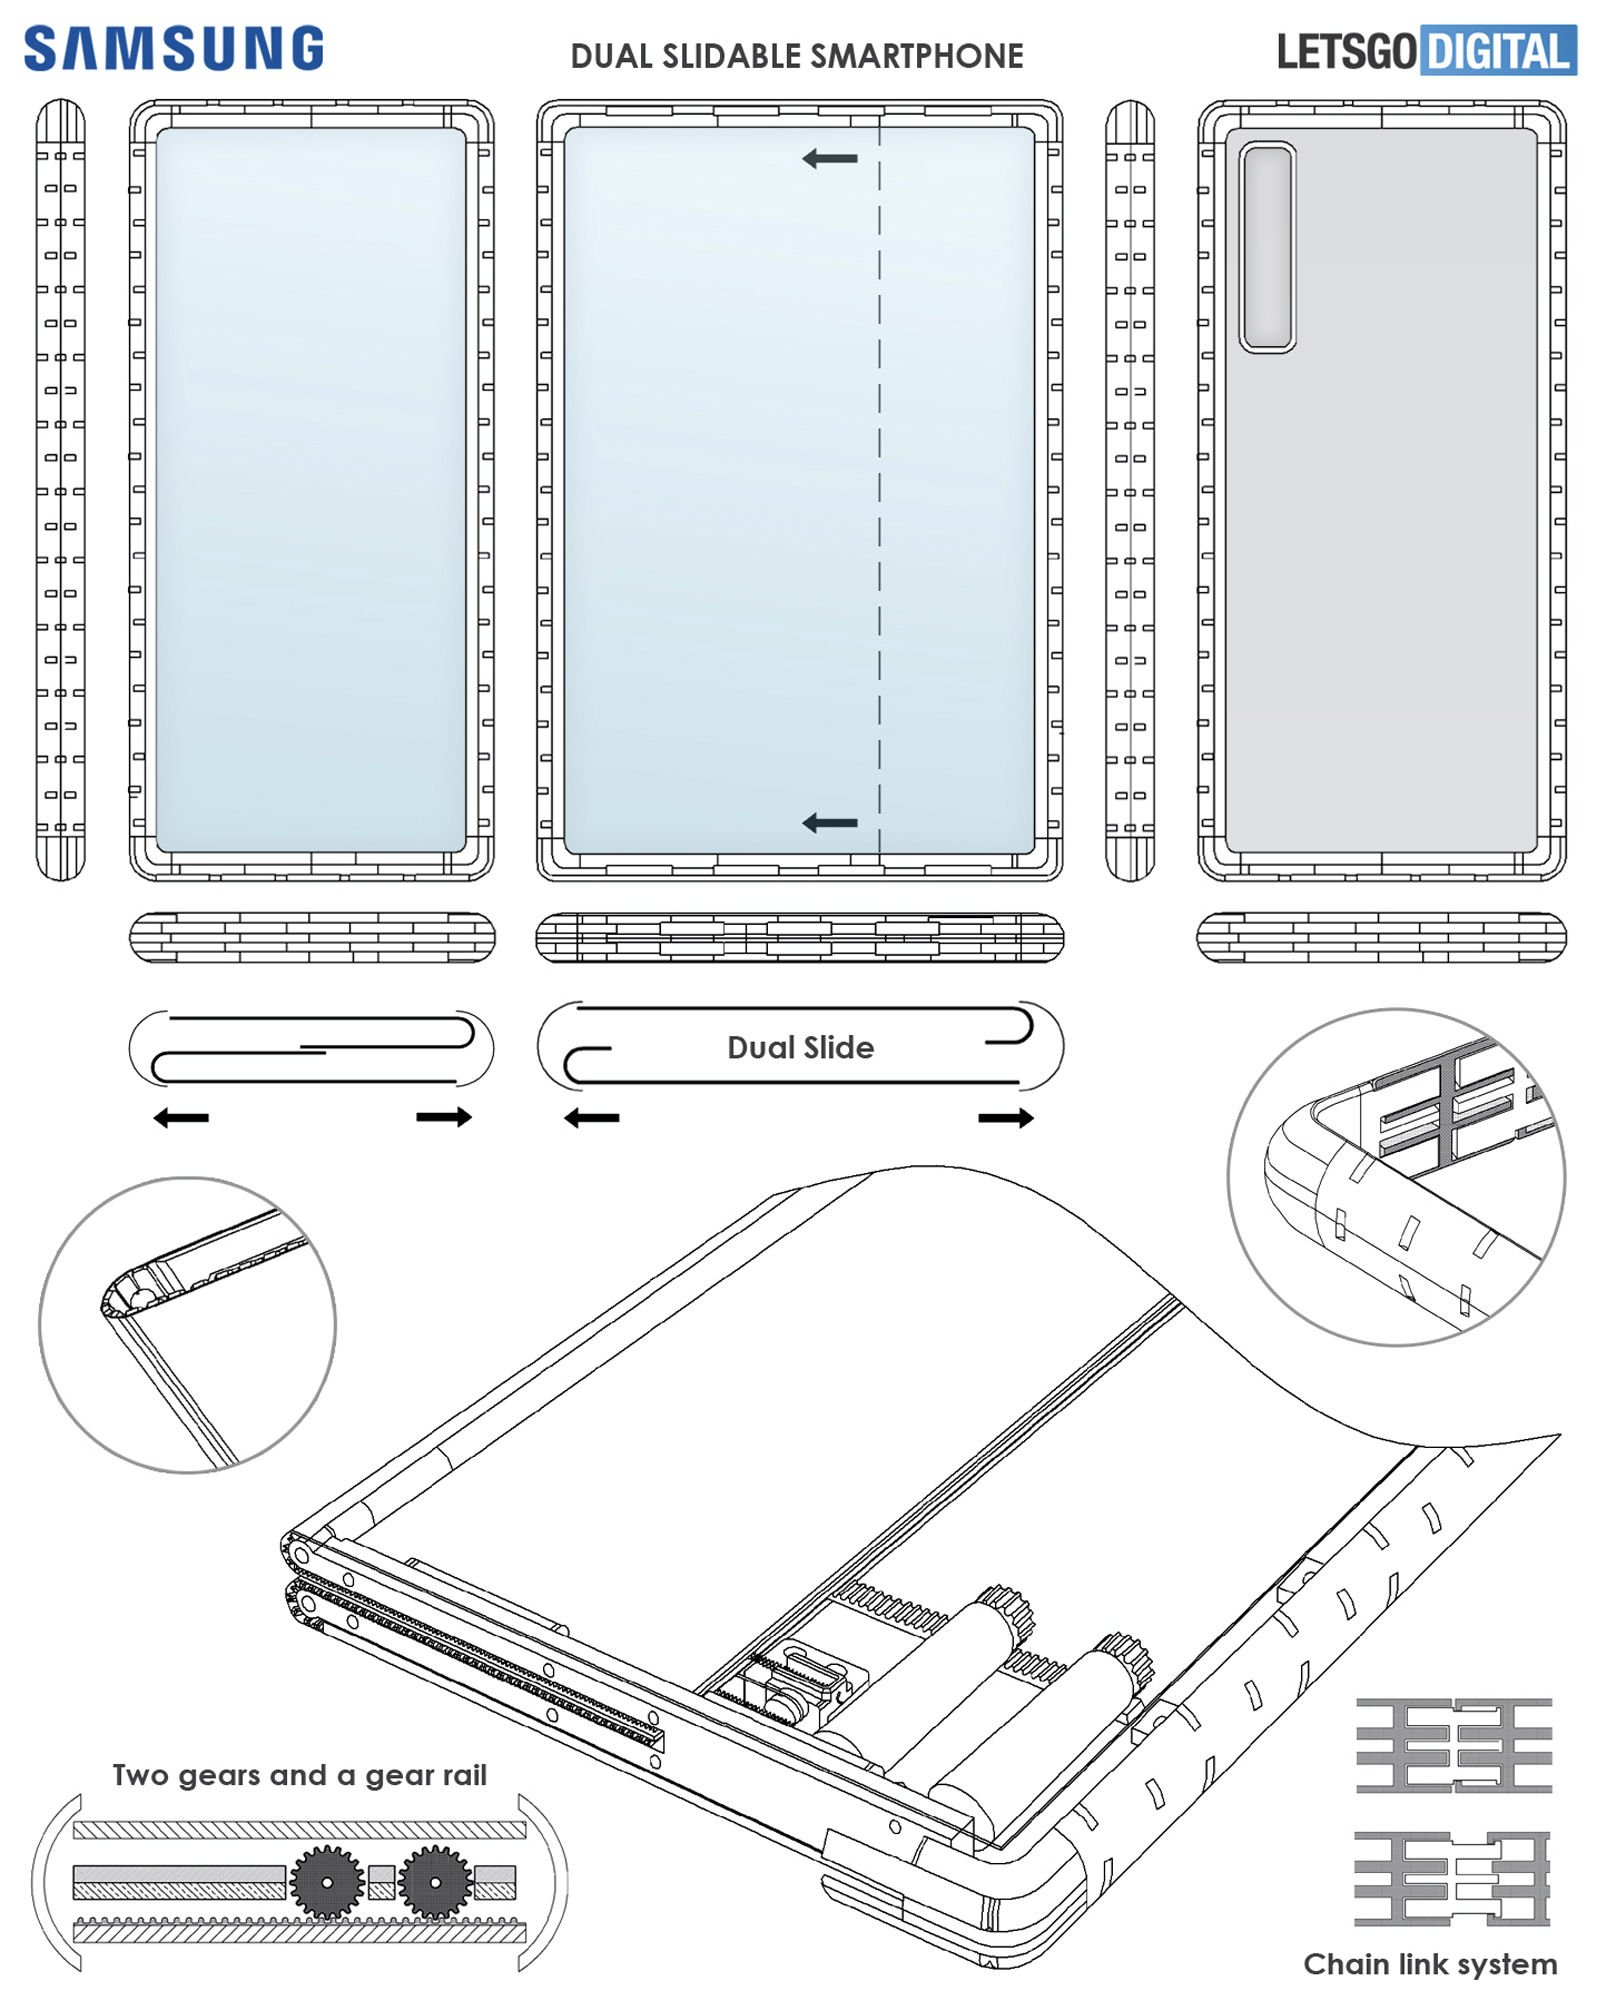 Patente Samsung Dual Slideable Smartphone |  Fuente: LetsGoDigital